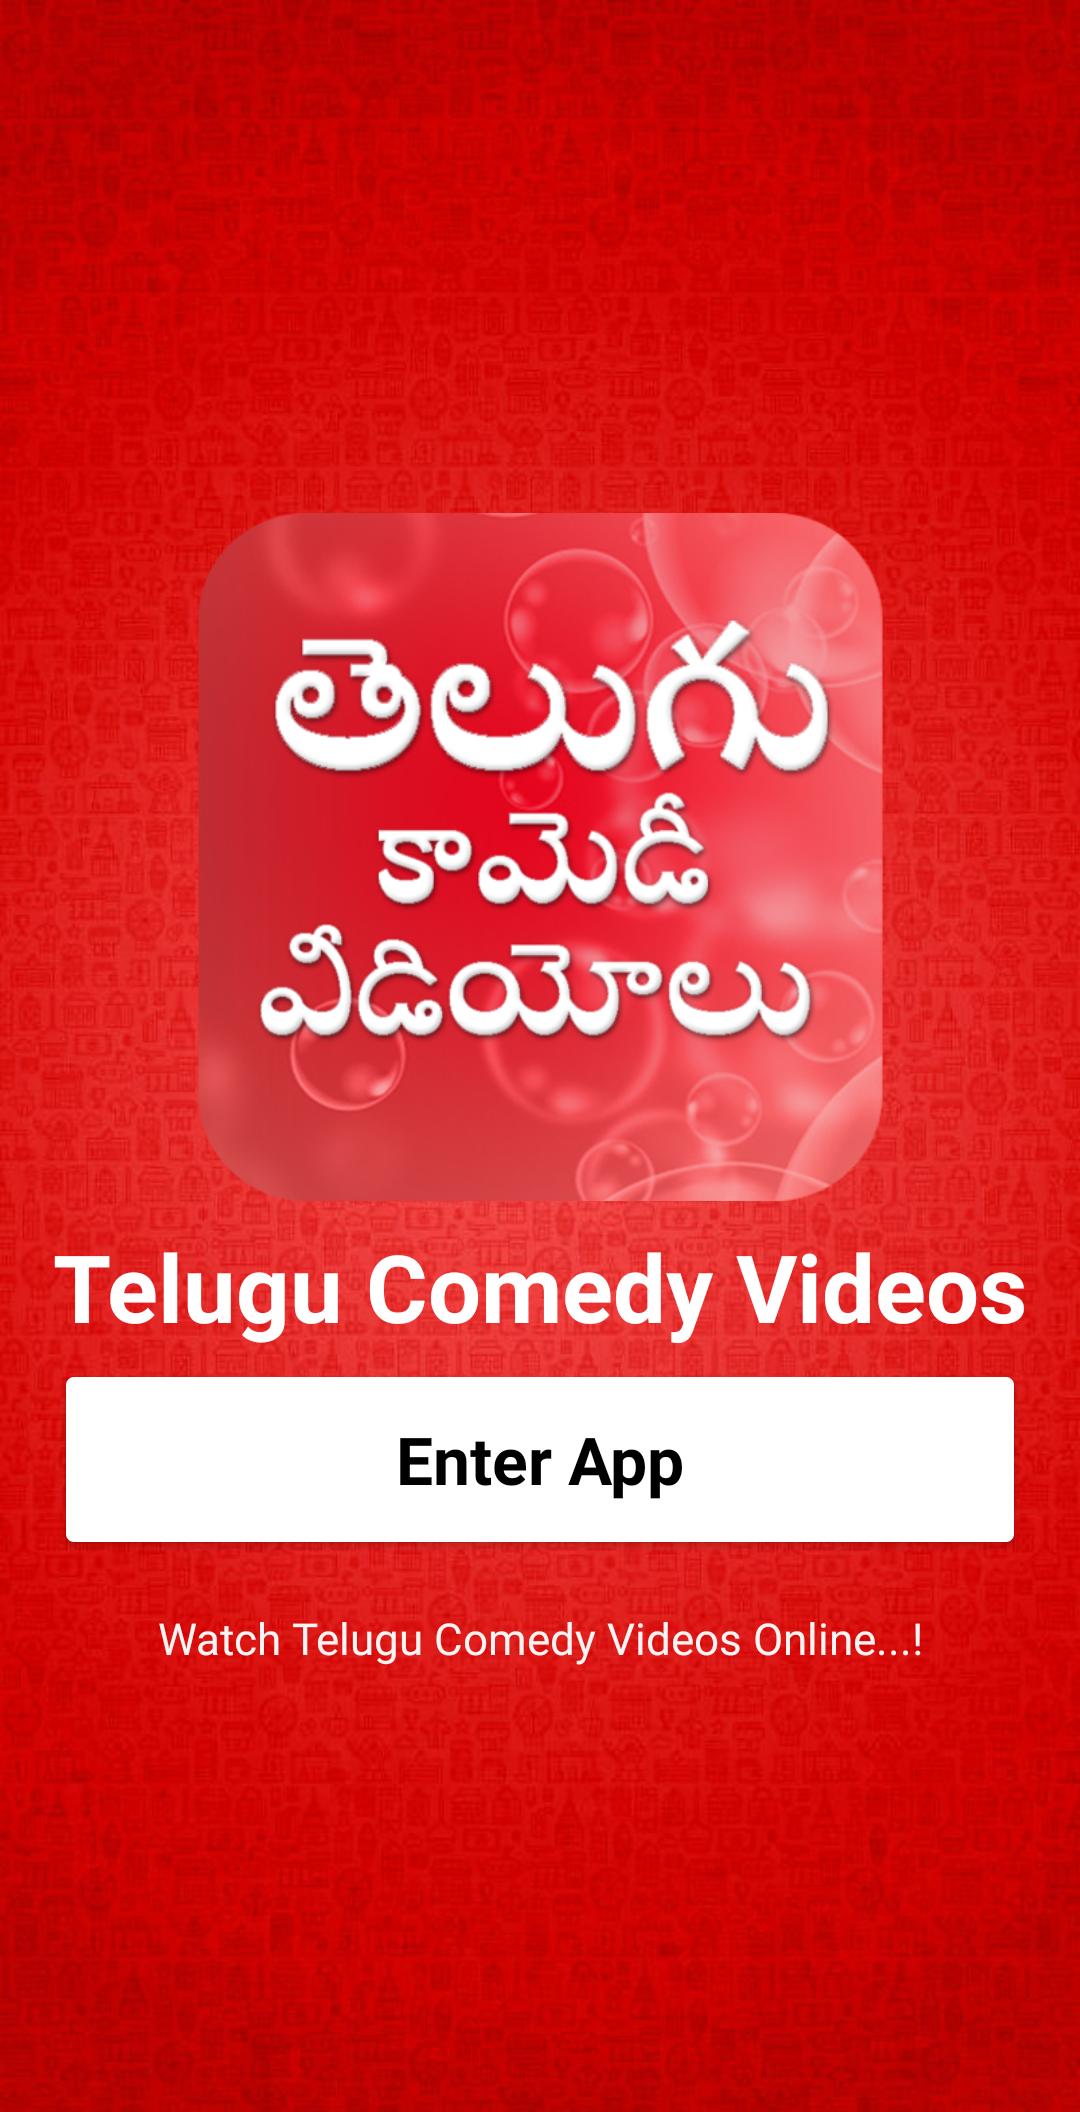 Telugu Comedy Videos - తెలుగు కామెడీ వీడియోలు APK for Android Download